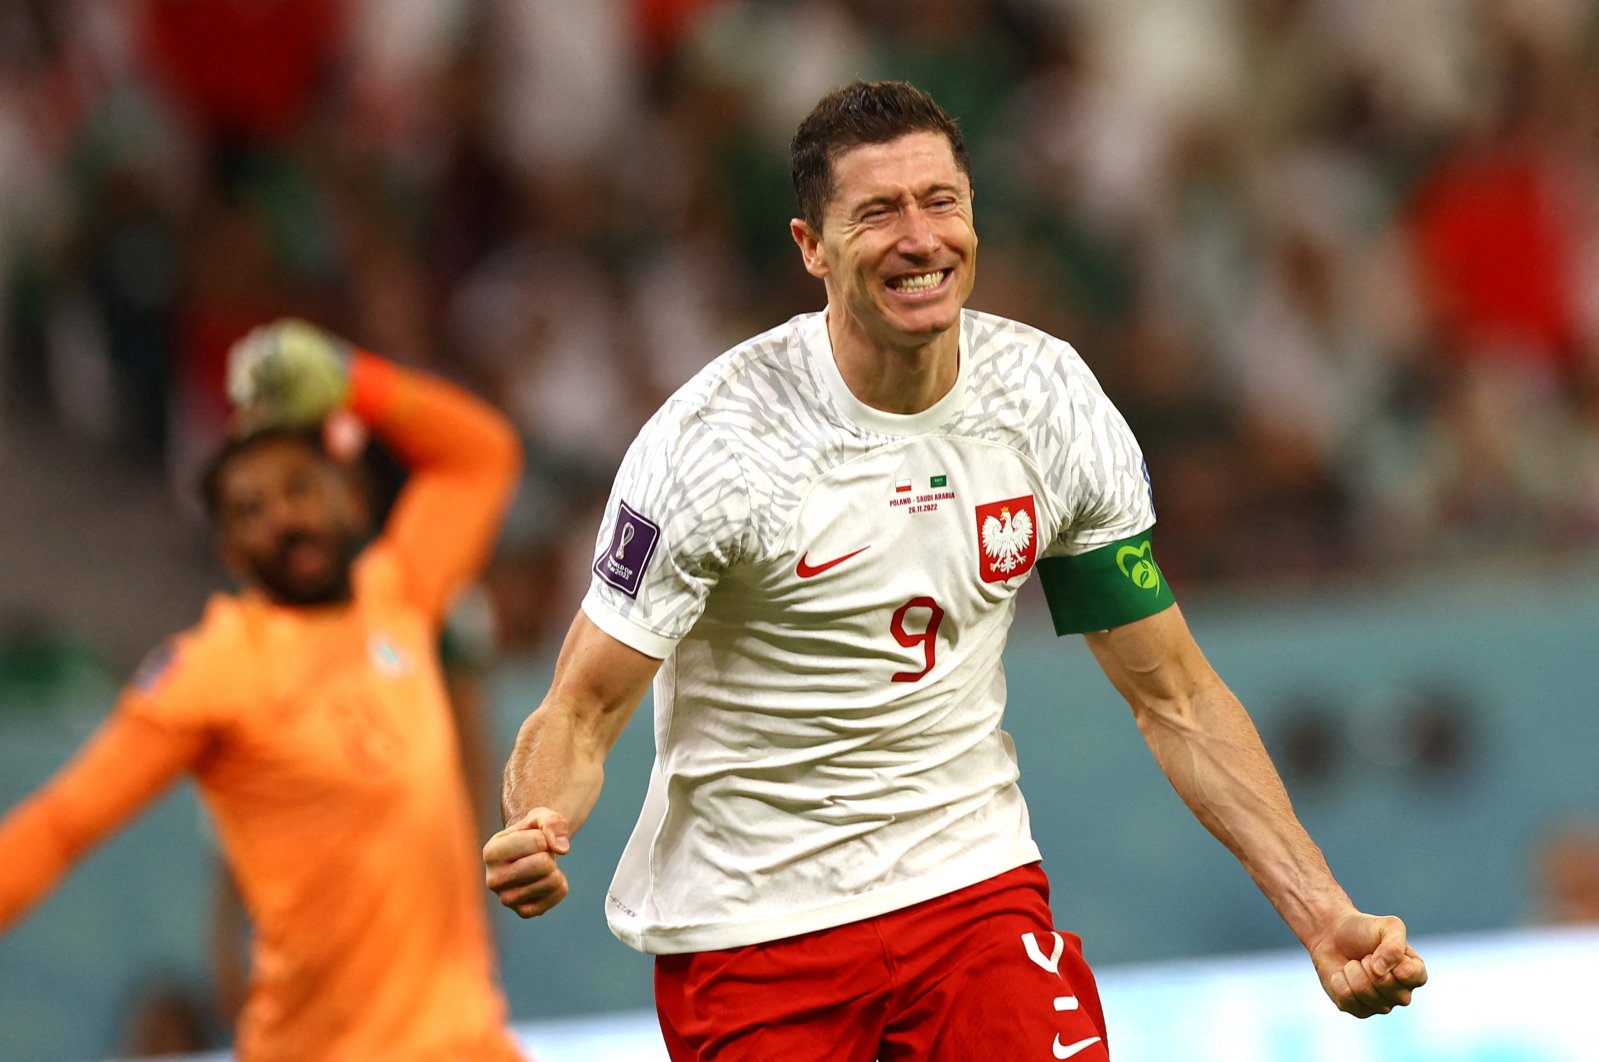 Poland&#039;s Robert Lewandowski celebrates scoring their second goal during the FIFA World Cup Qatar 2022 Group C match between Poland and Saudi Arabia, at the Education City Stadium, in Al Rayyan, Qatar, Nov. 26, 2022. (Reuters Photo)